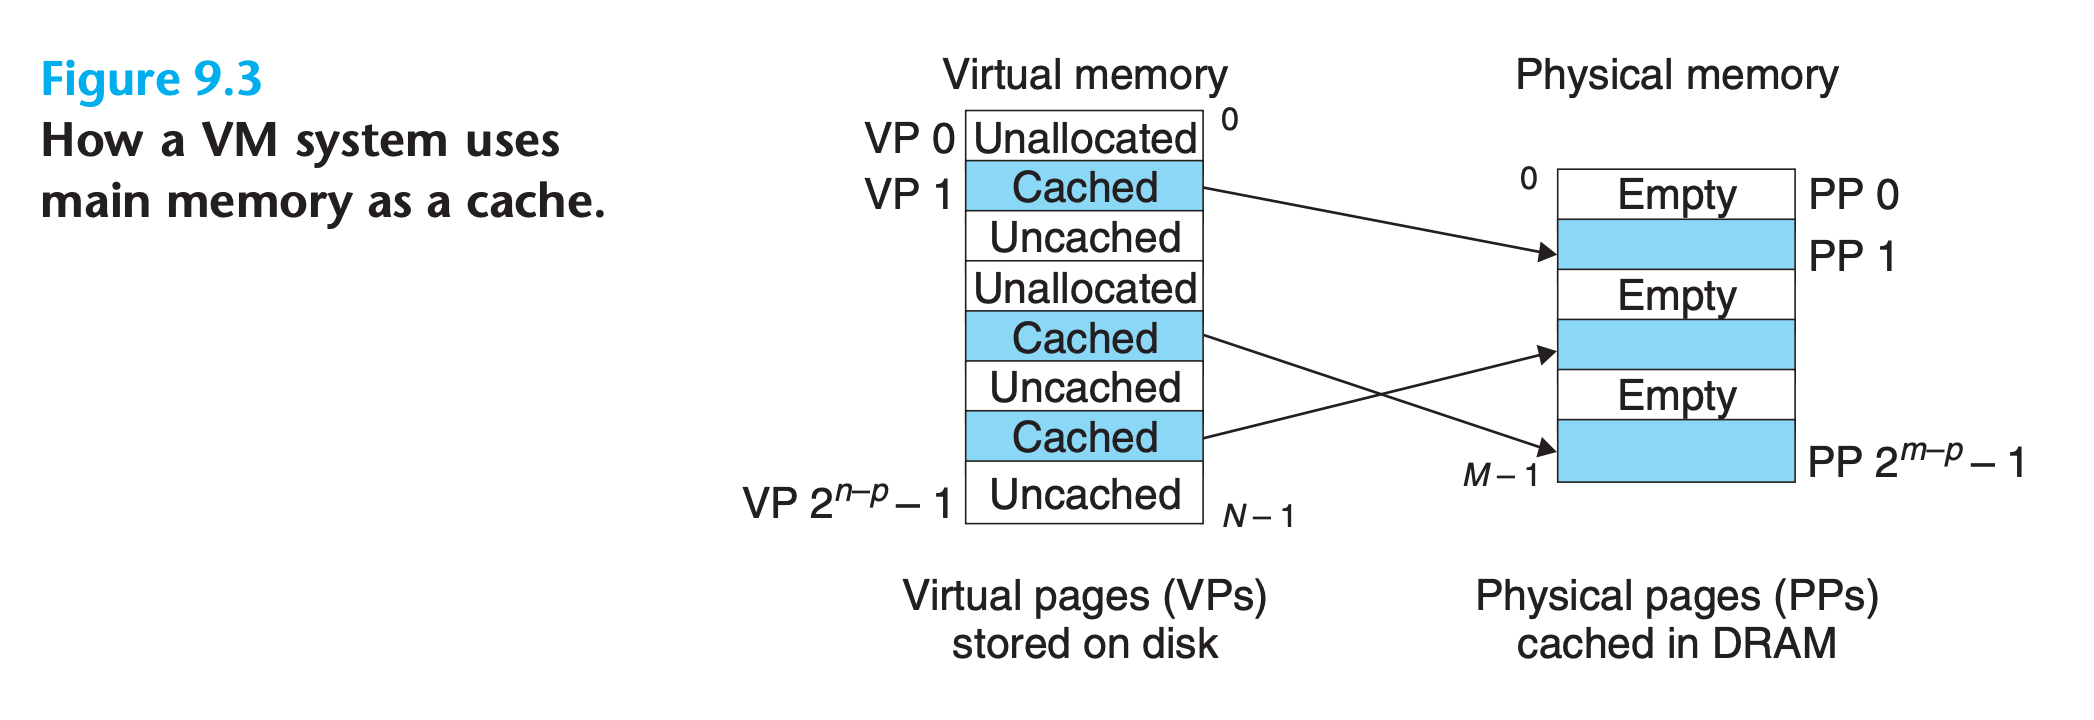 Virtual Memory System